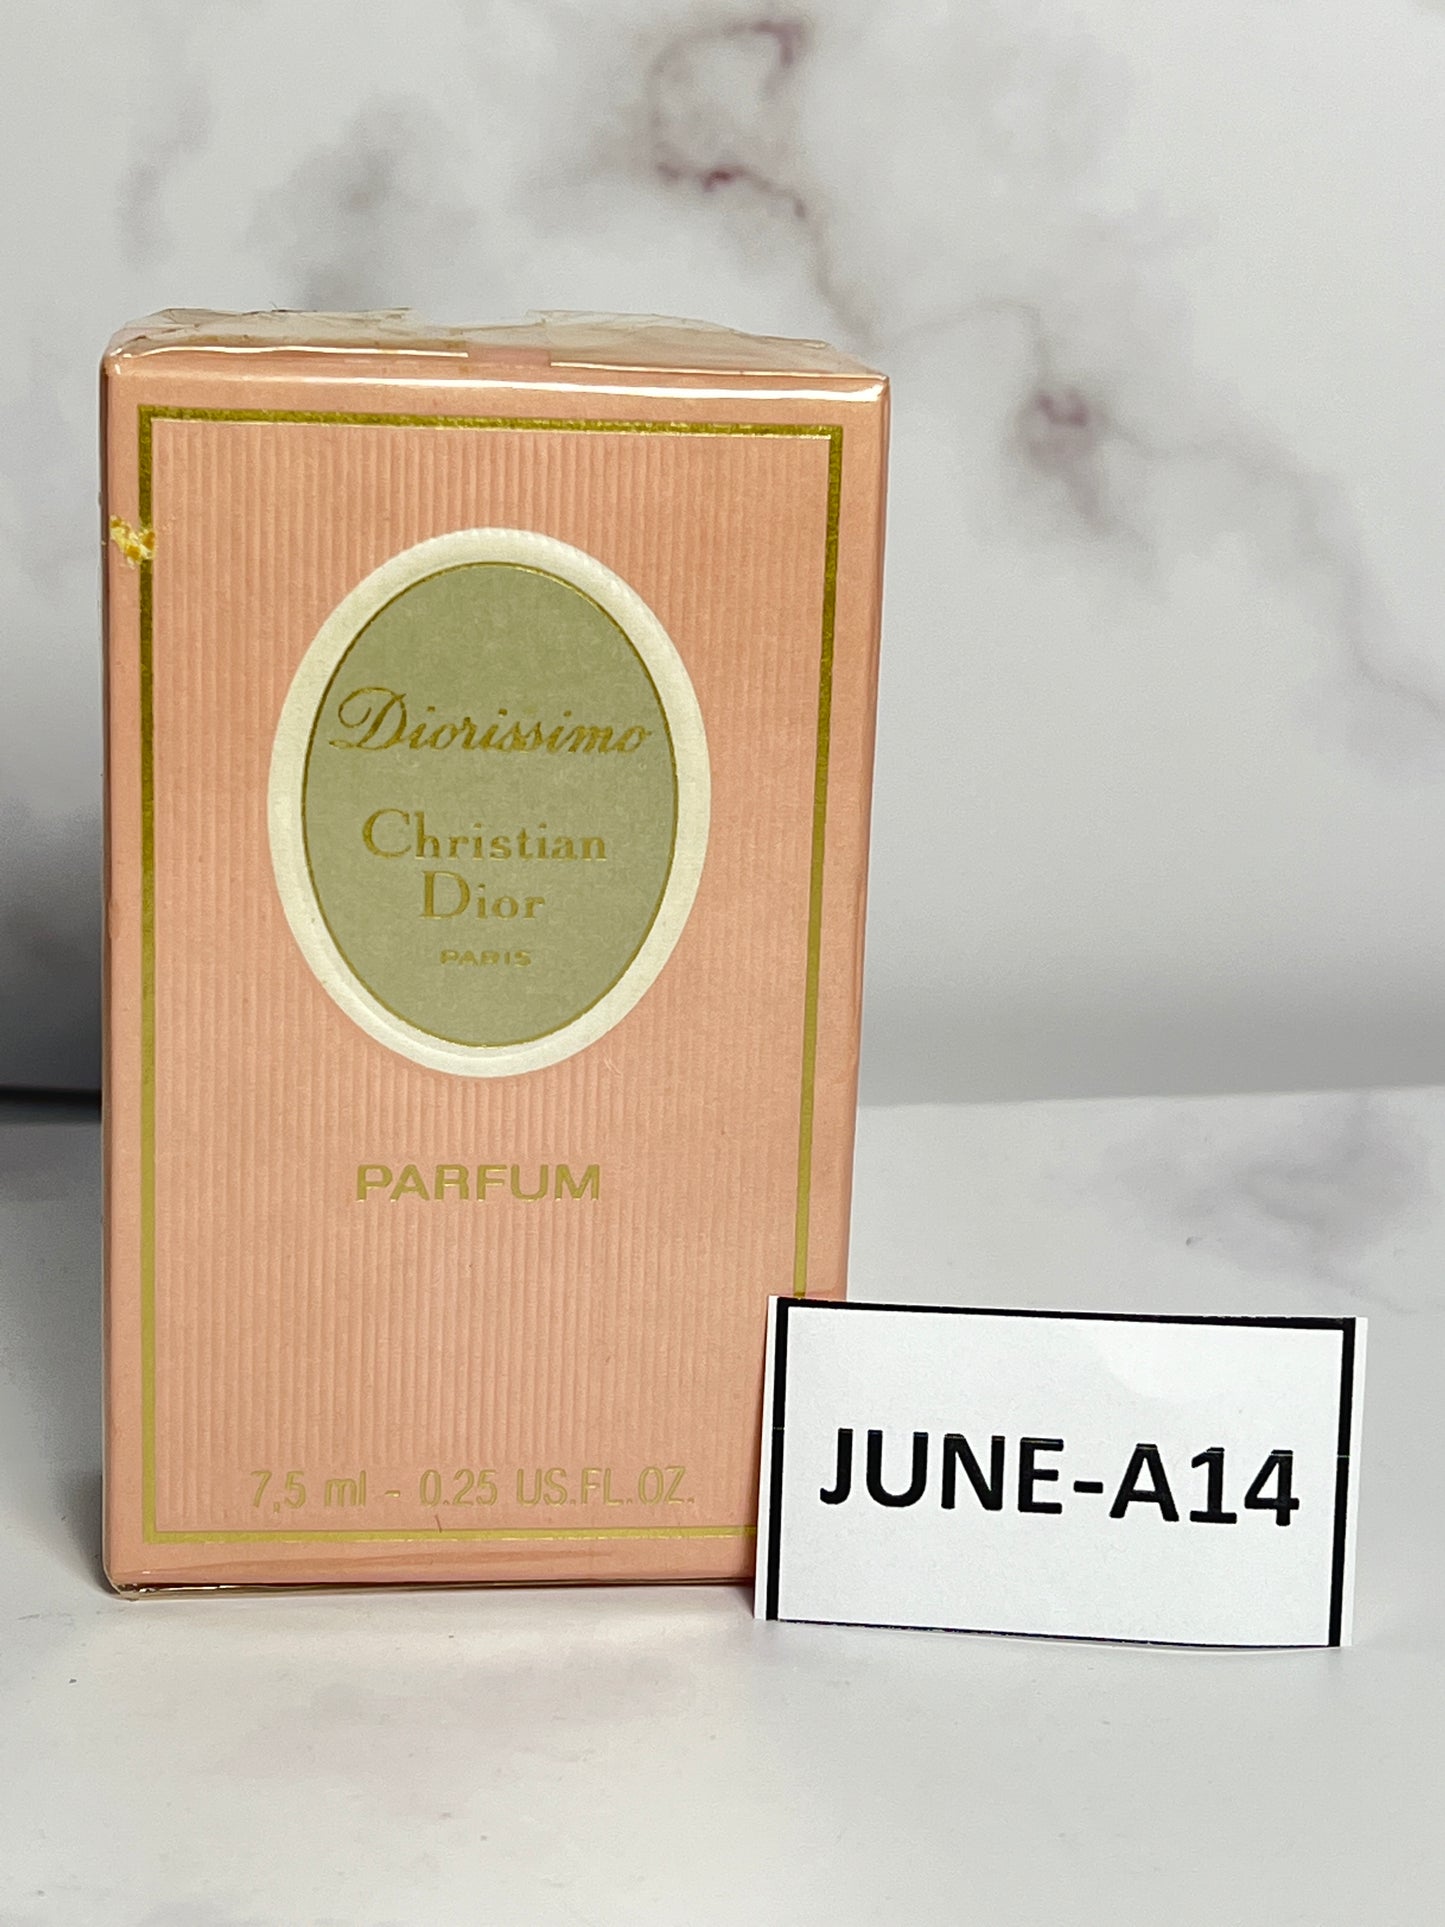 Sealed Christian Dior Diorissimo 7.5ml 0.25 oz parfum Perfume  - JUNE-A14